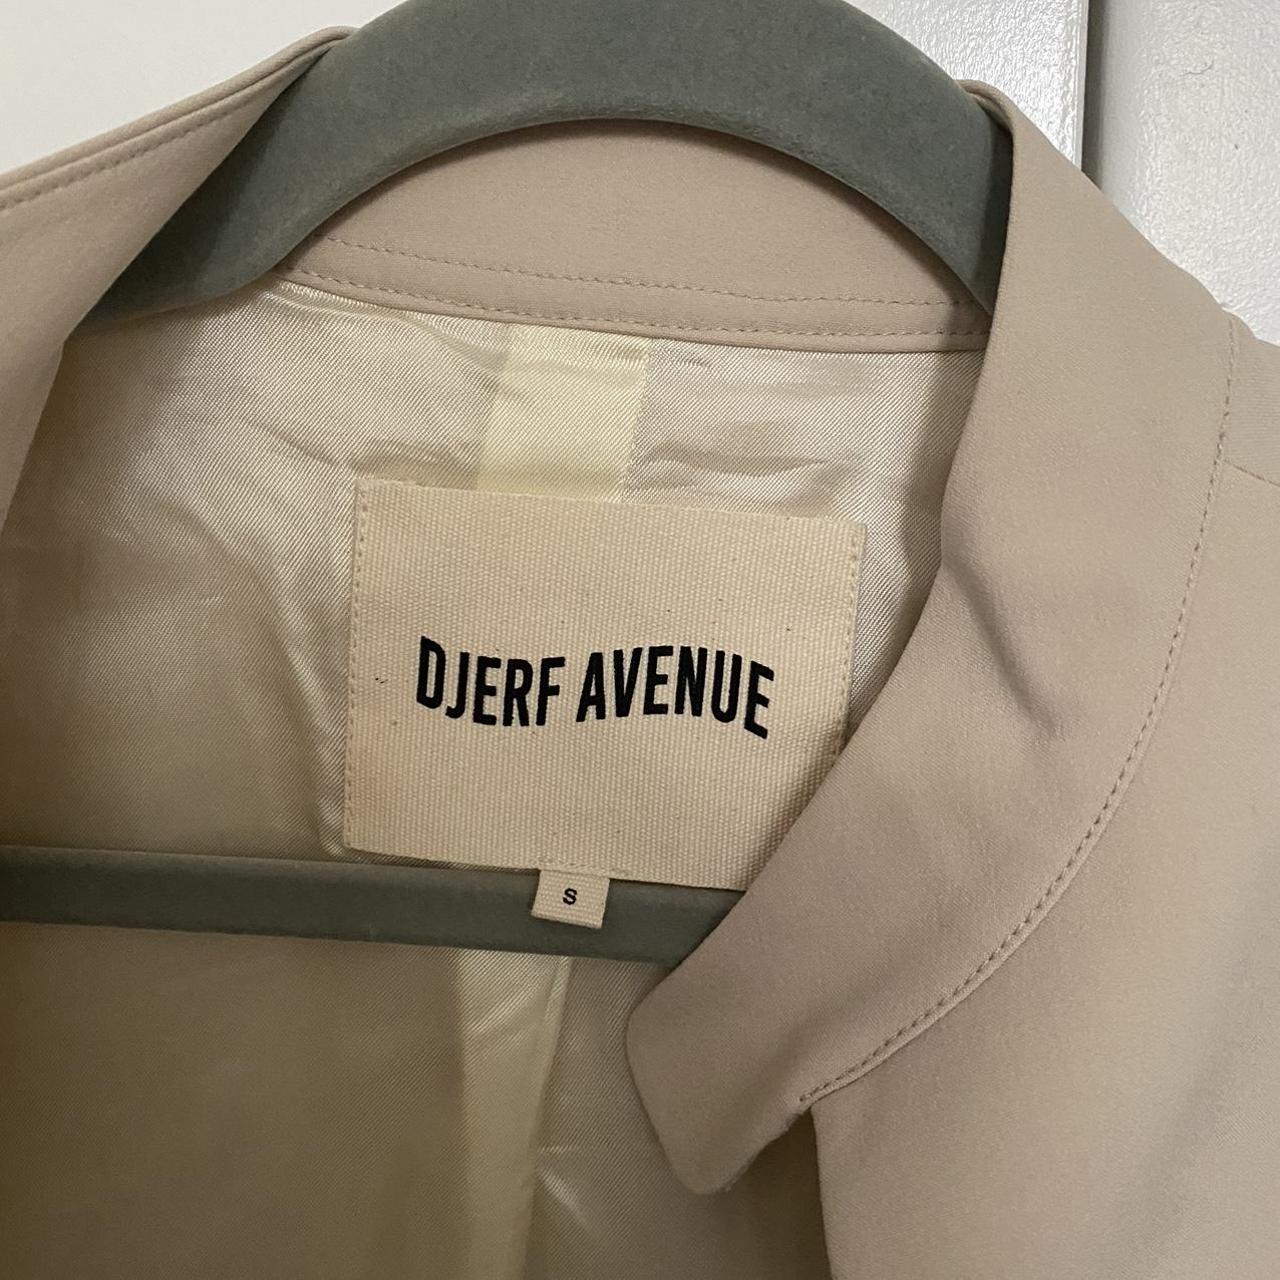 Djerf Avenue Women's Cream and Tan Jacket (5)